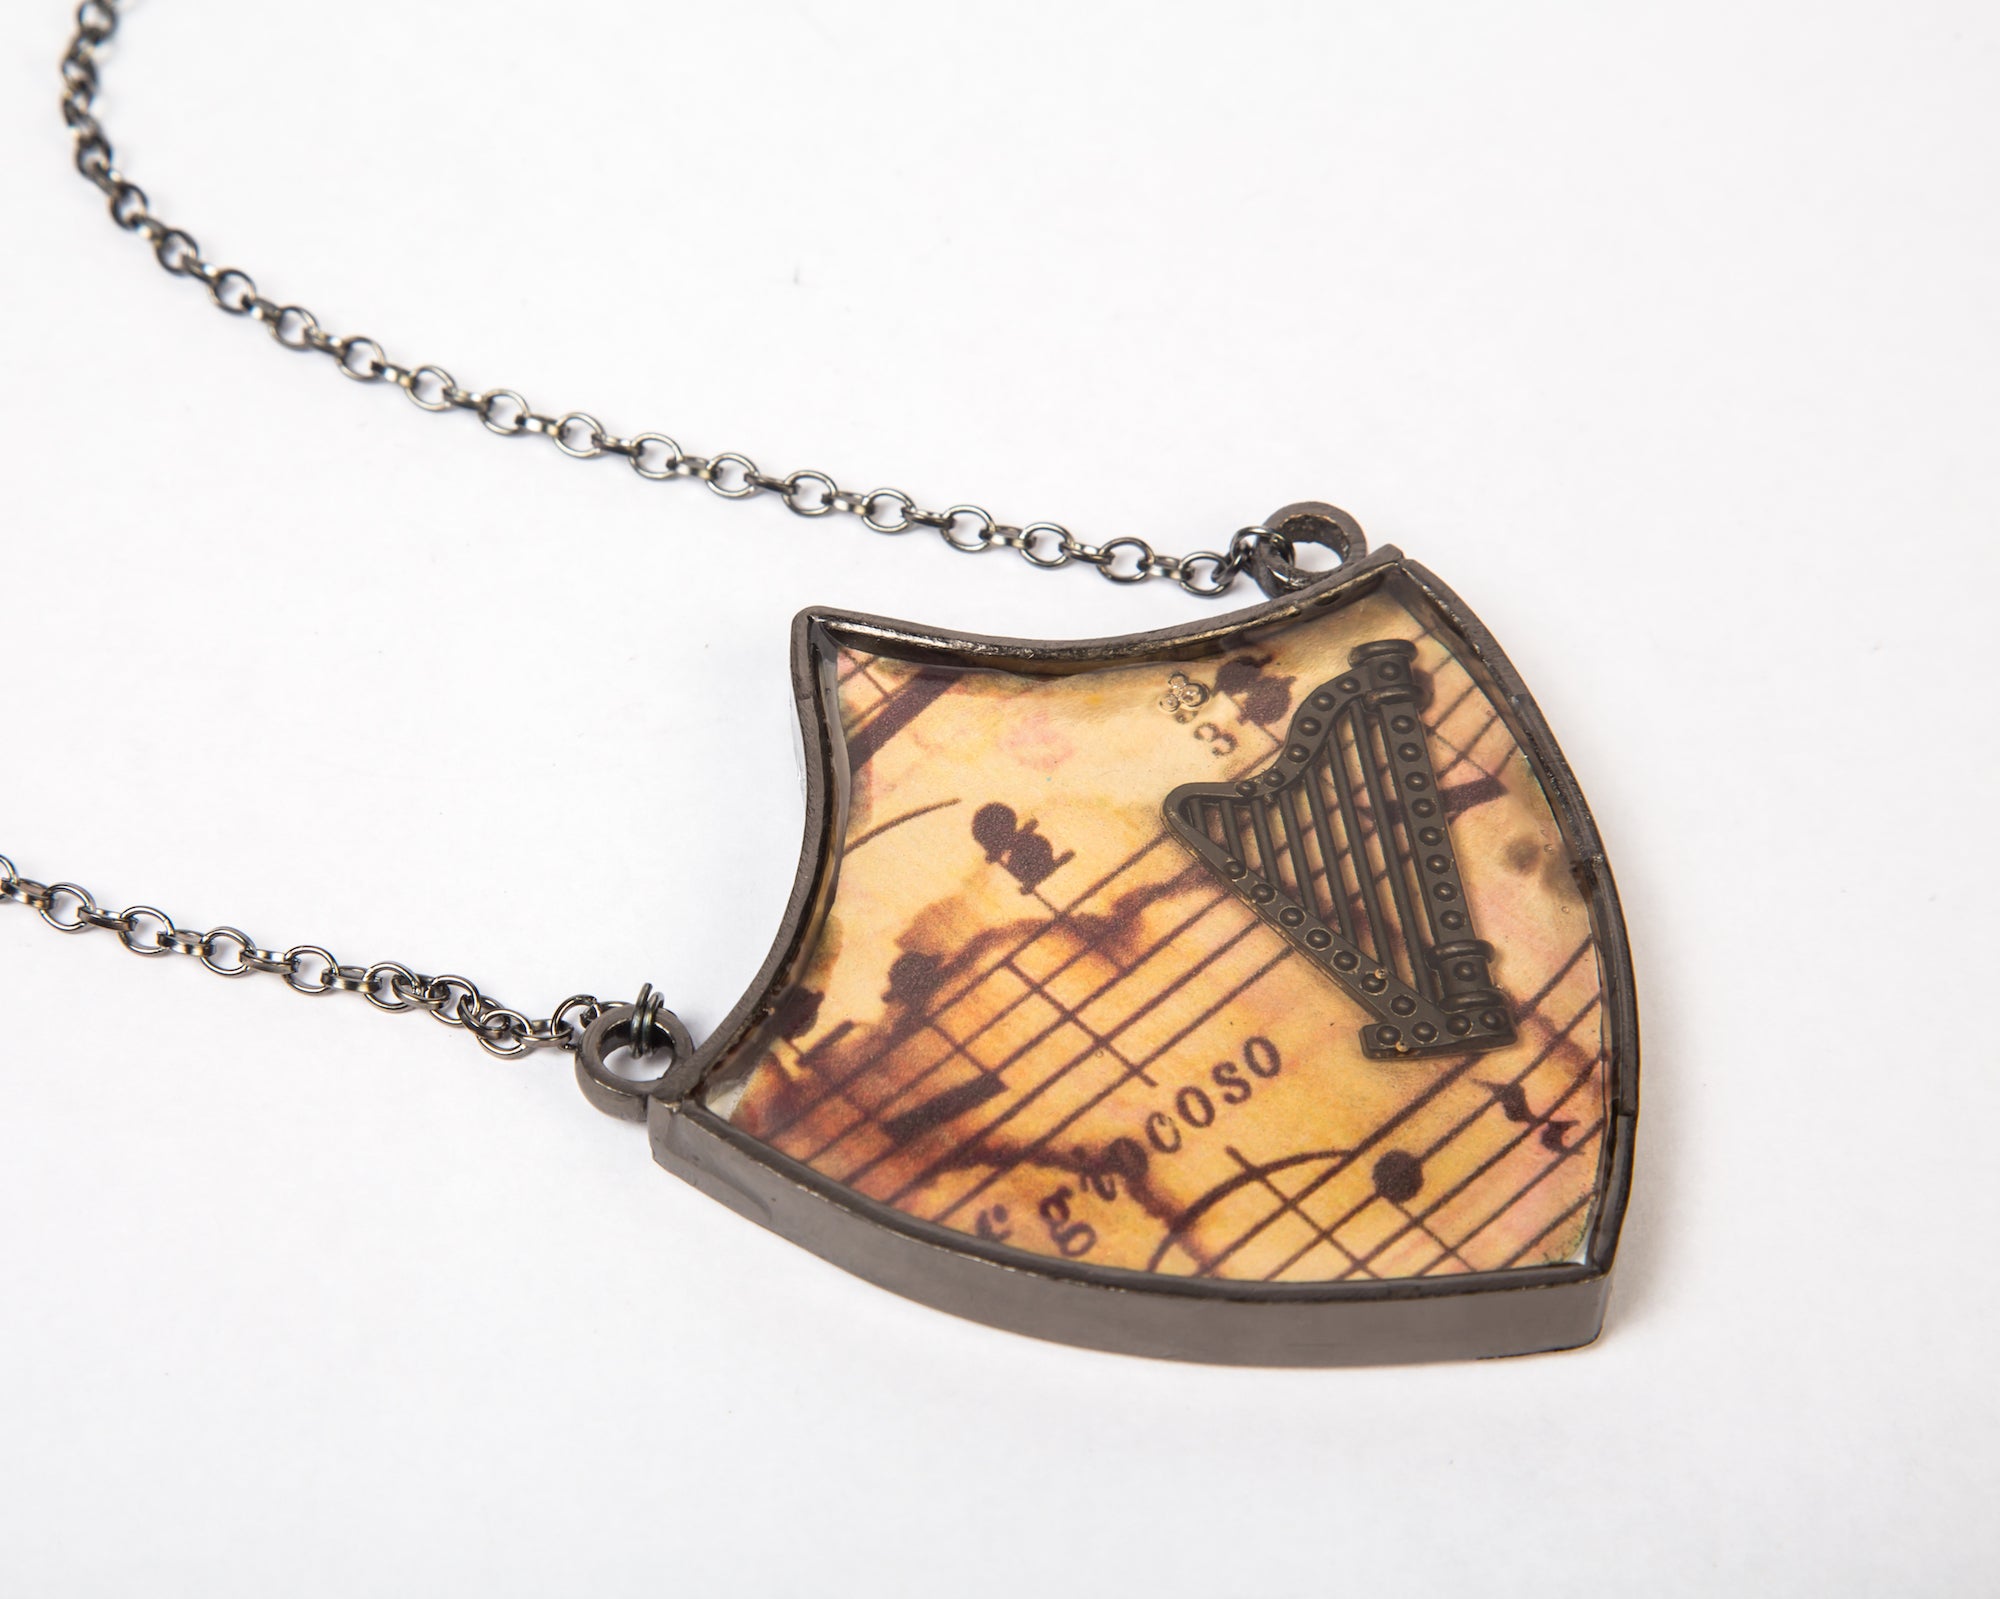 Copper with vintage finish harp musical neckpiece